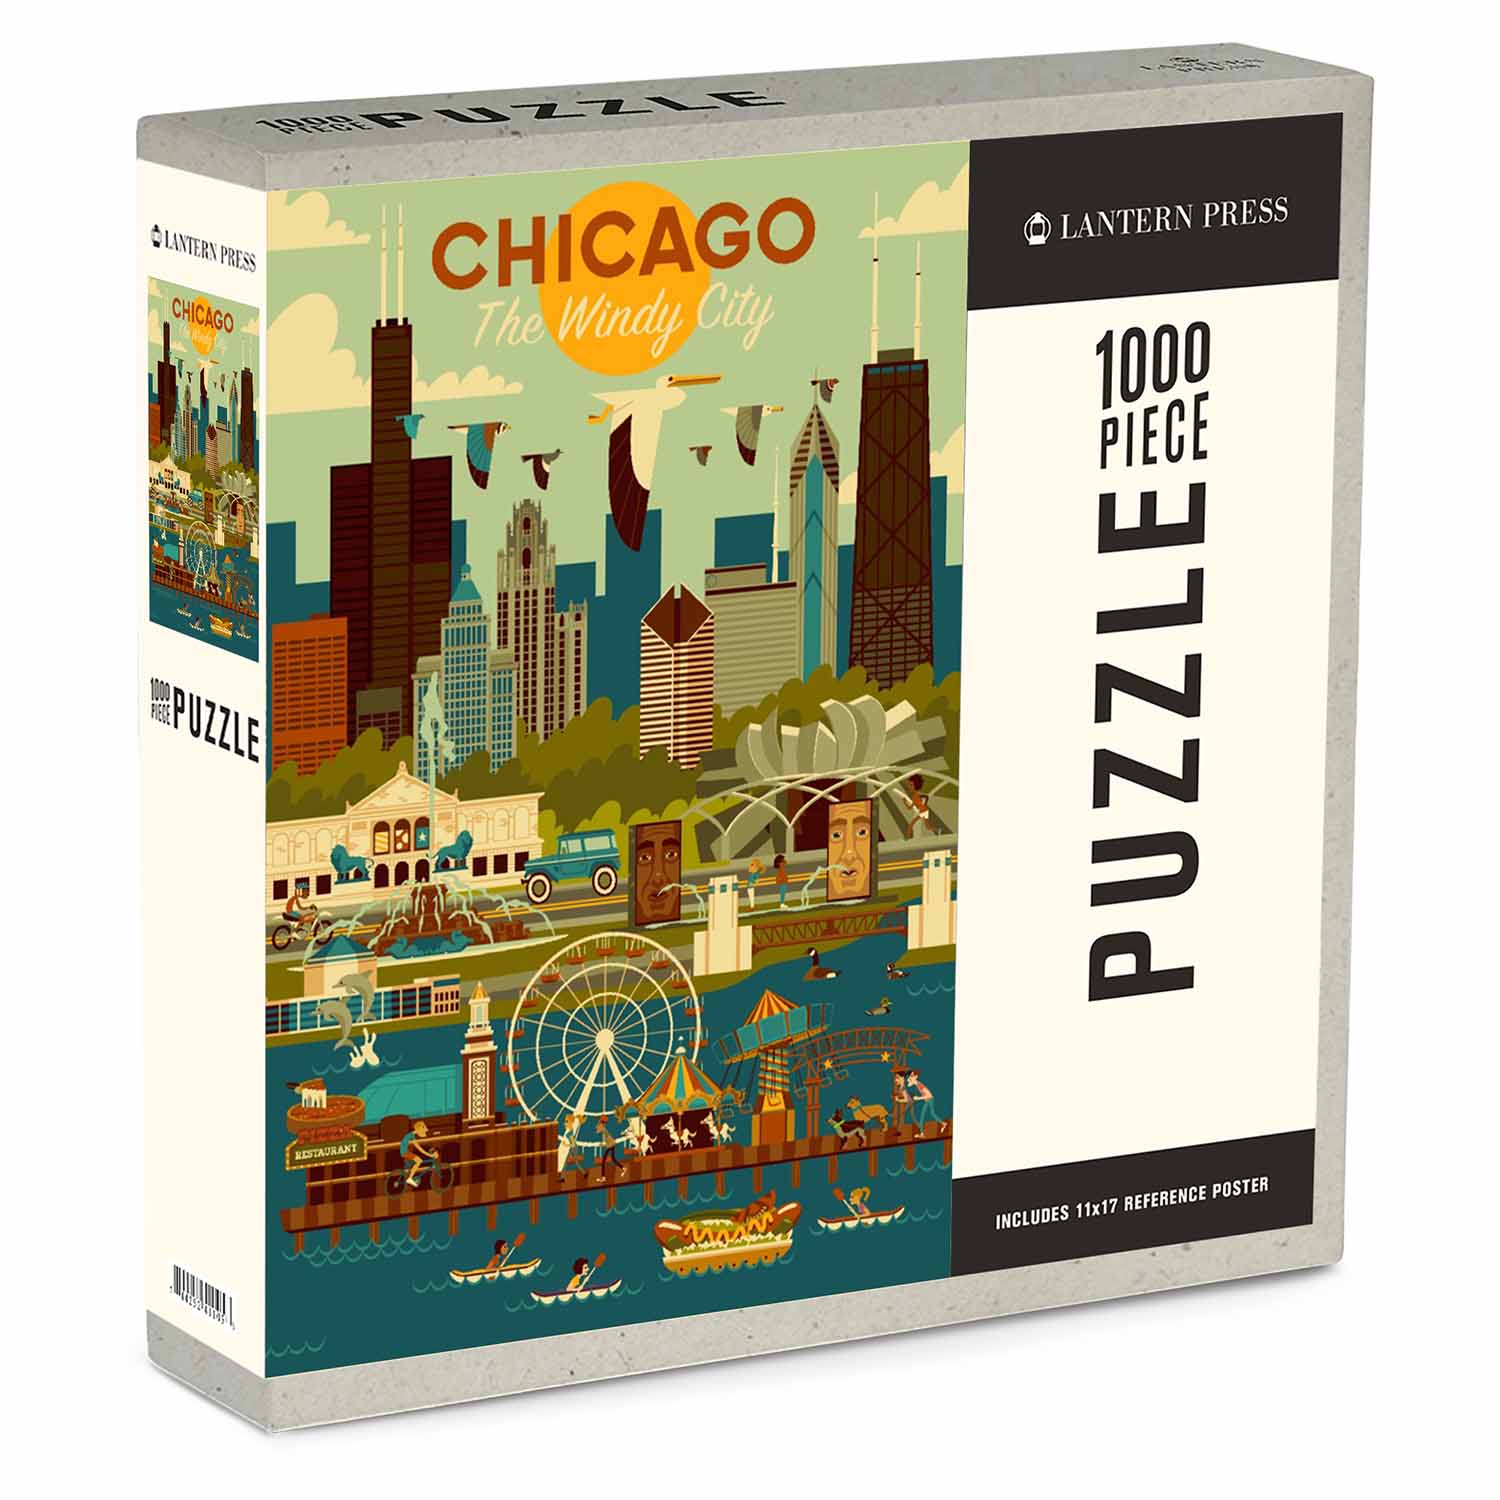 Chicago, Illinois Chicago Jigsaw Puzzle